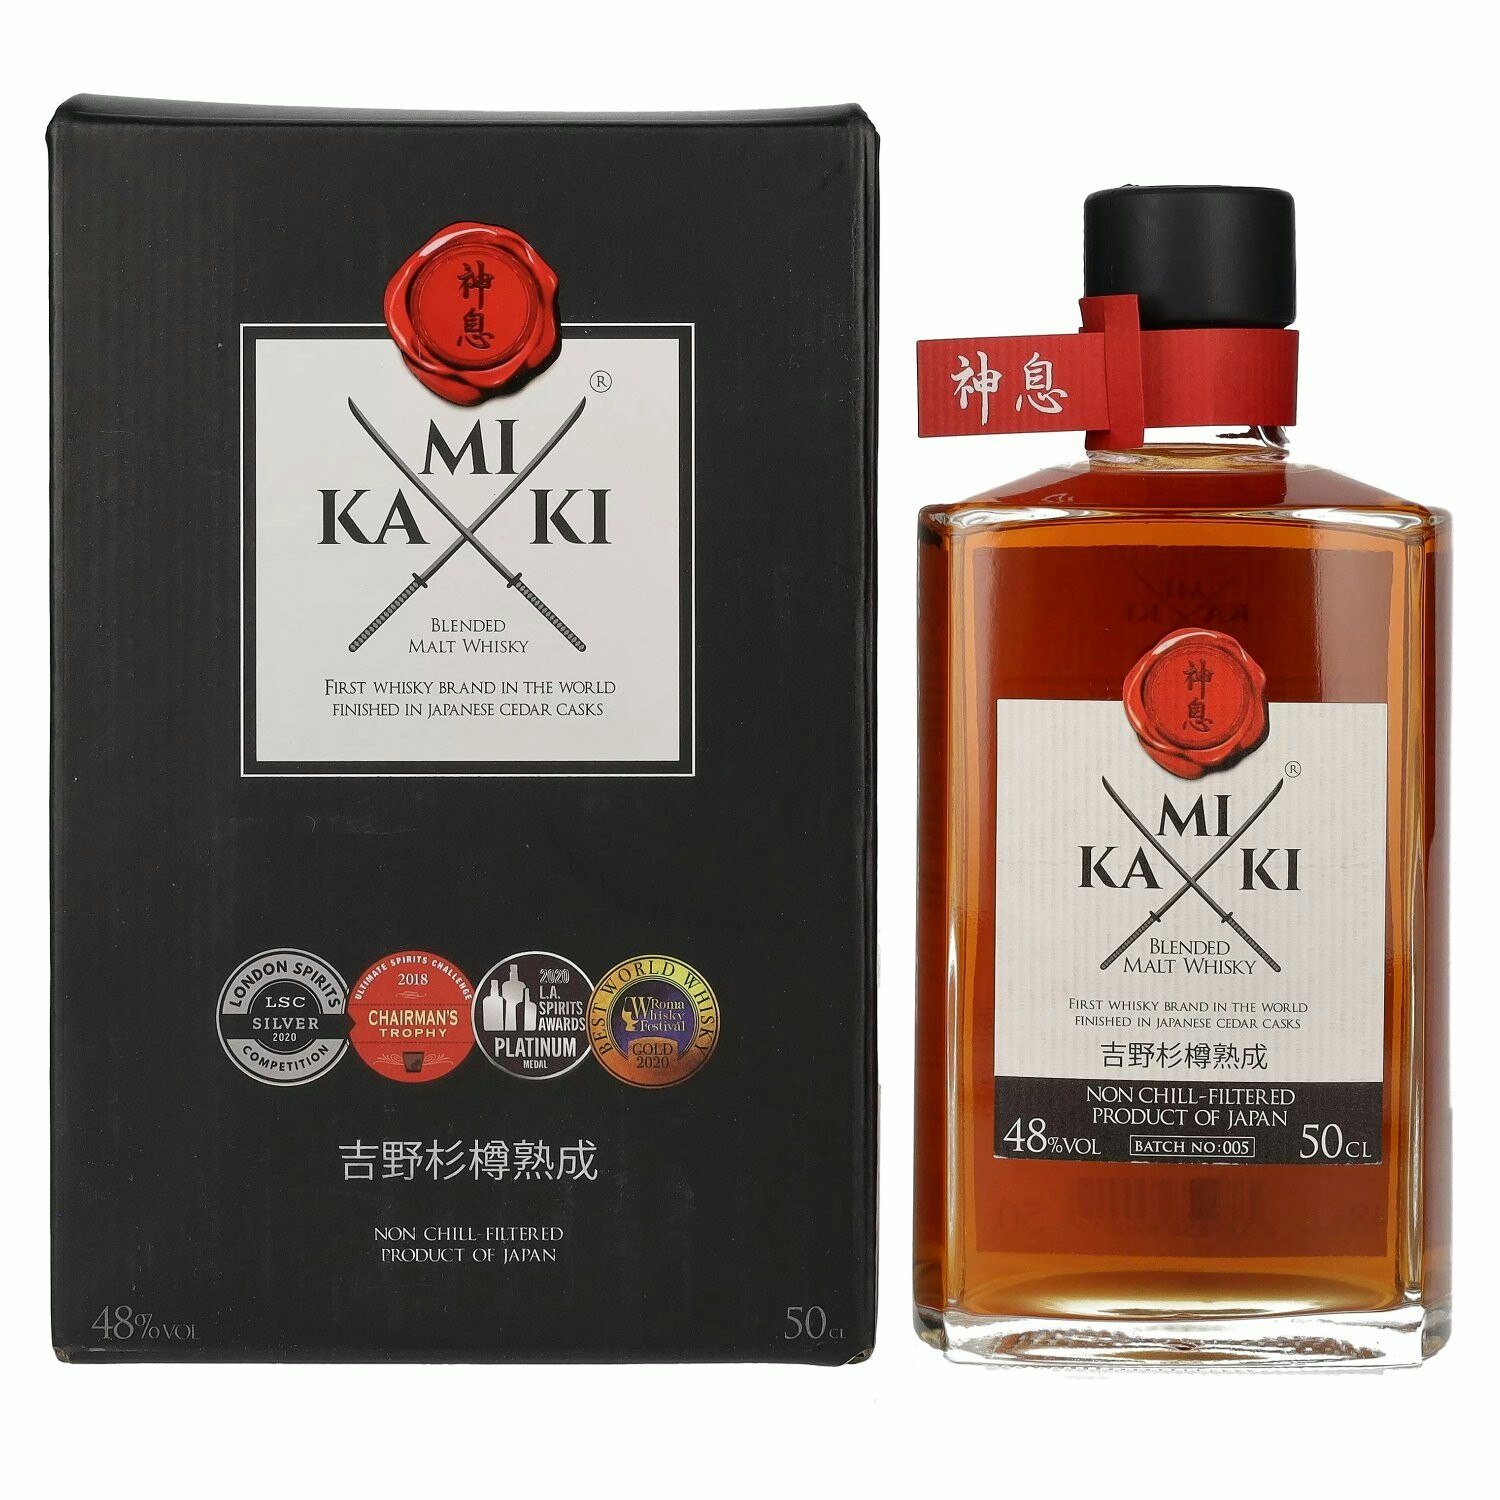 KAMIKI Blended Malt Whisky 48% Vol. 0,5l in Giftbox